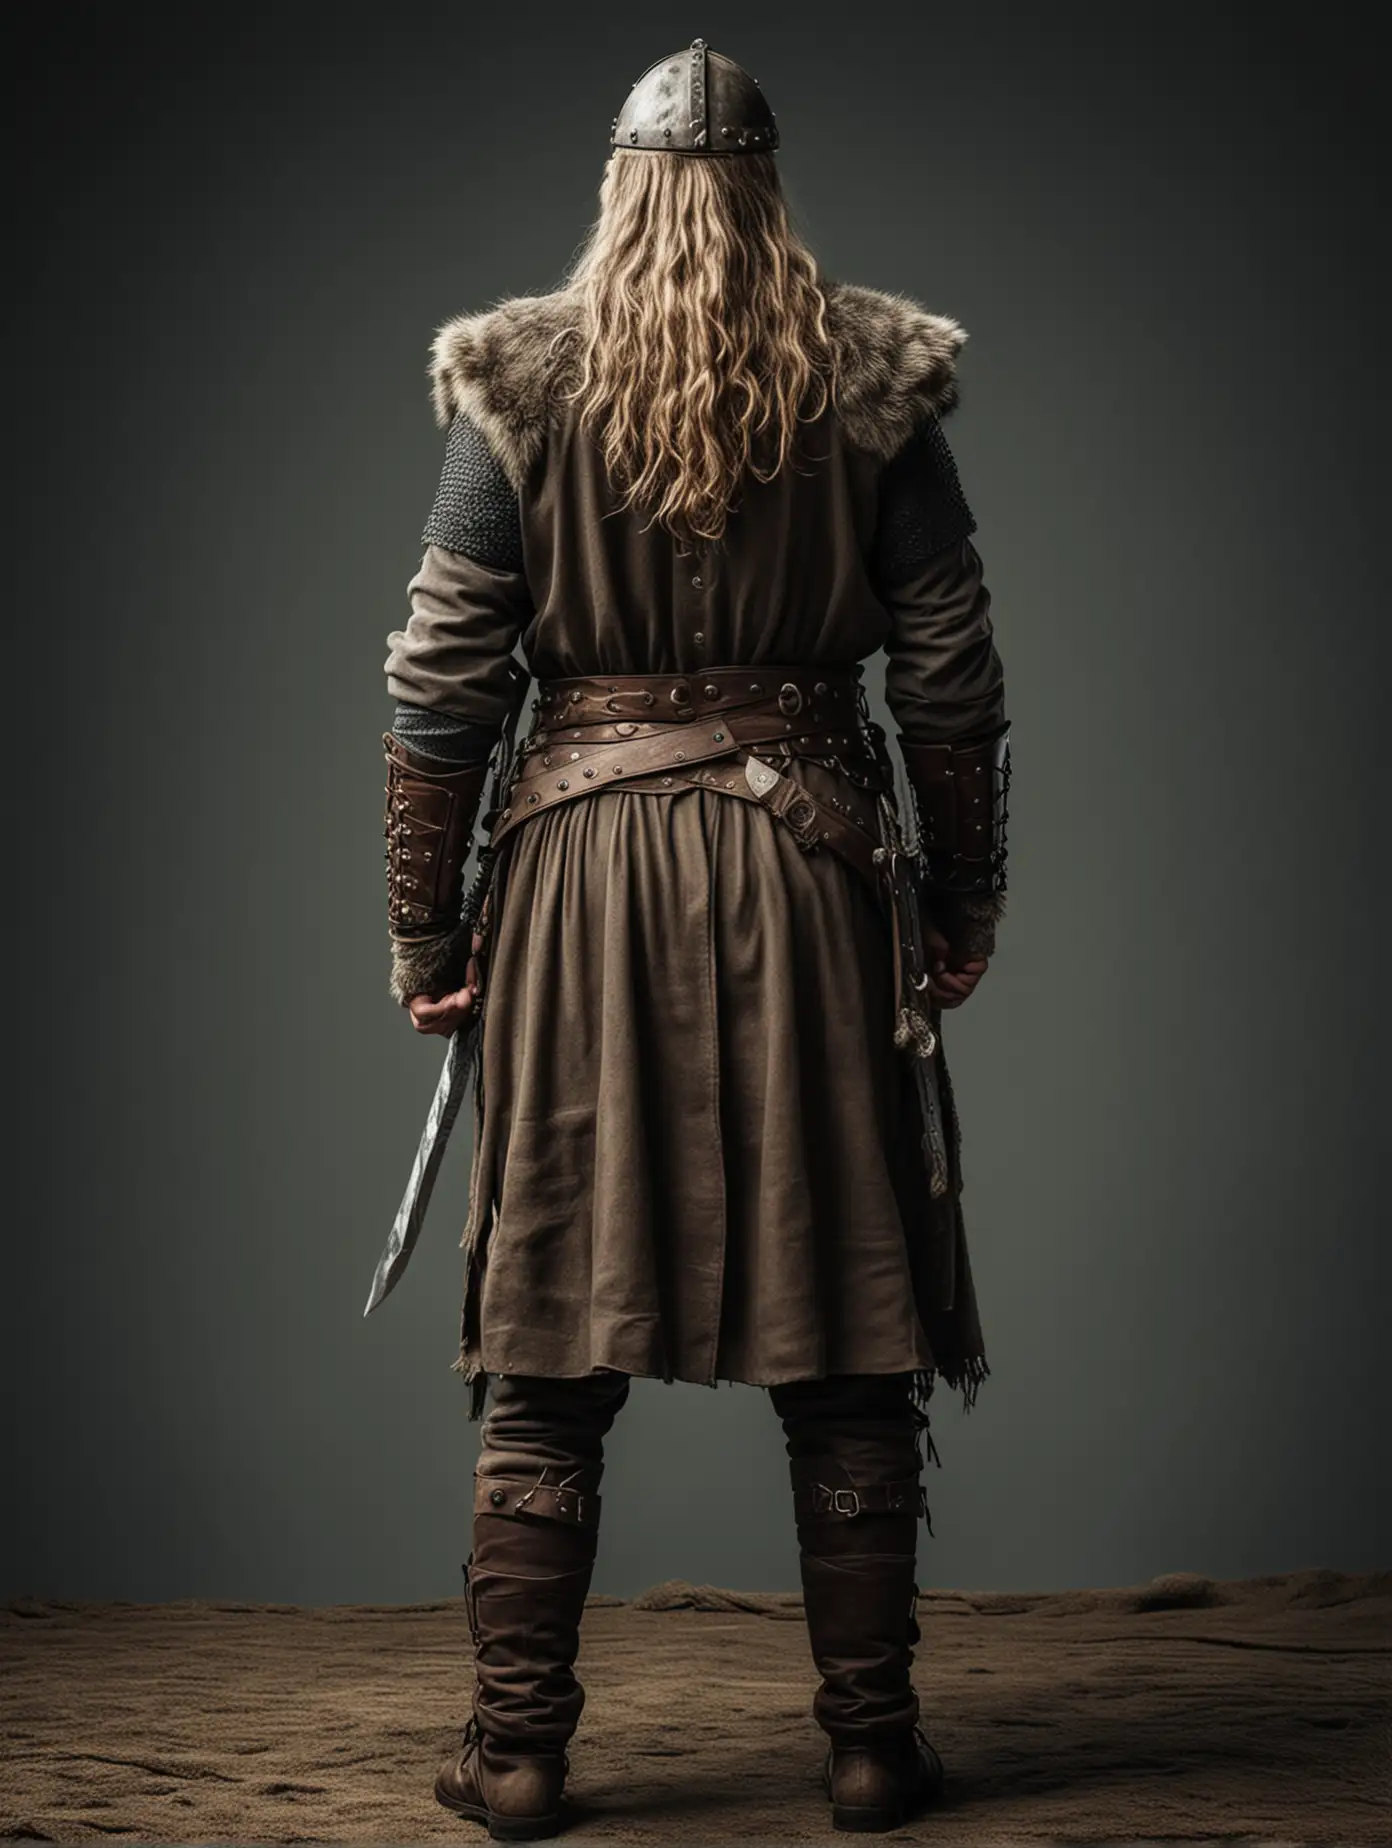 viking warrior, back view, full body, show no face, recreate photo

